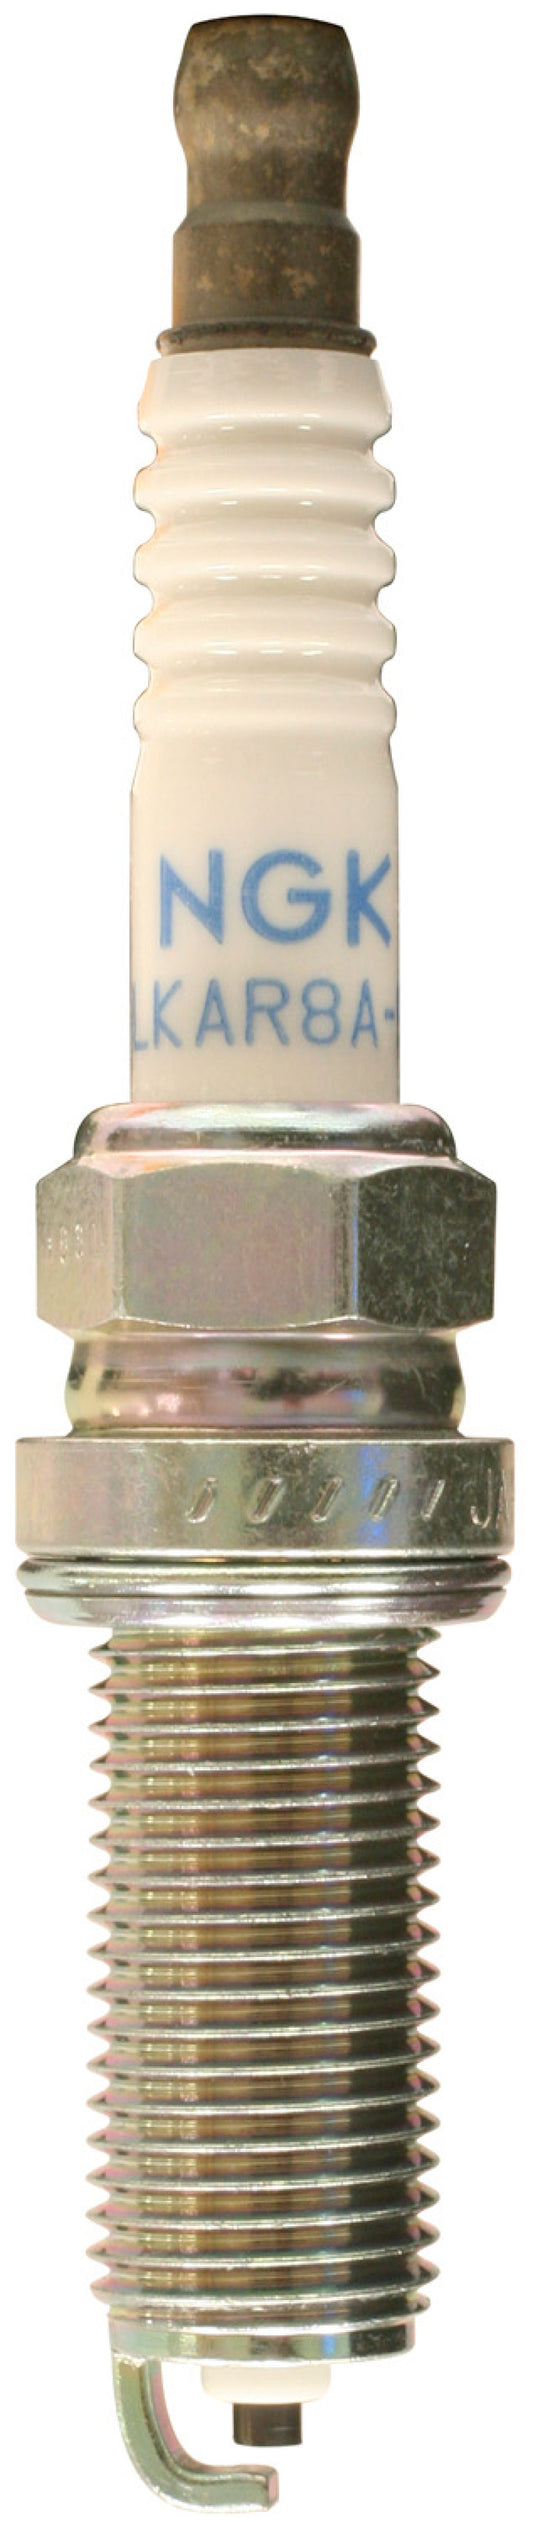 NGK Nickel Spark Plug Box of 10 (LKAR8A-9)